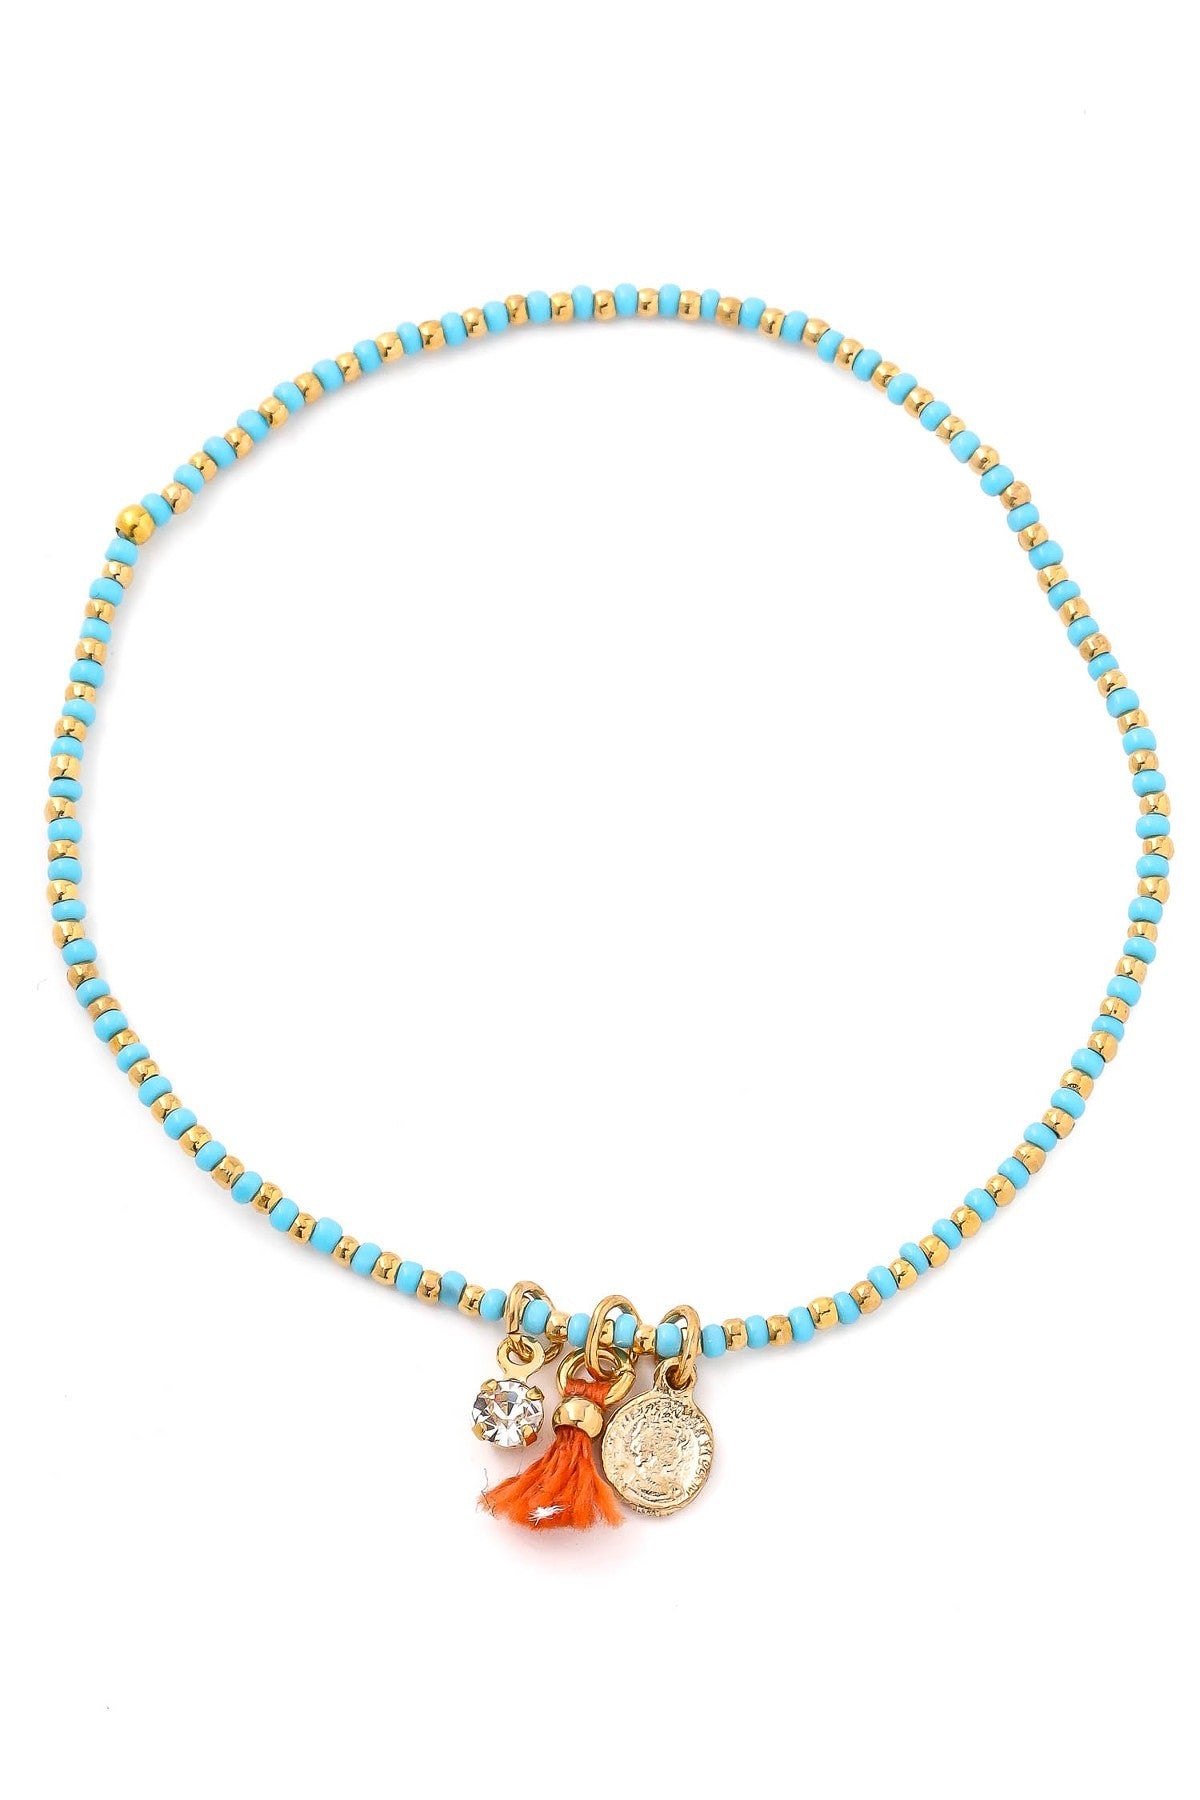 FMB040 Dainty Beaded Bracelet Turquoise